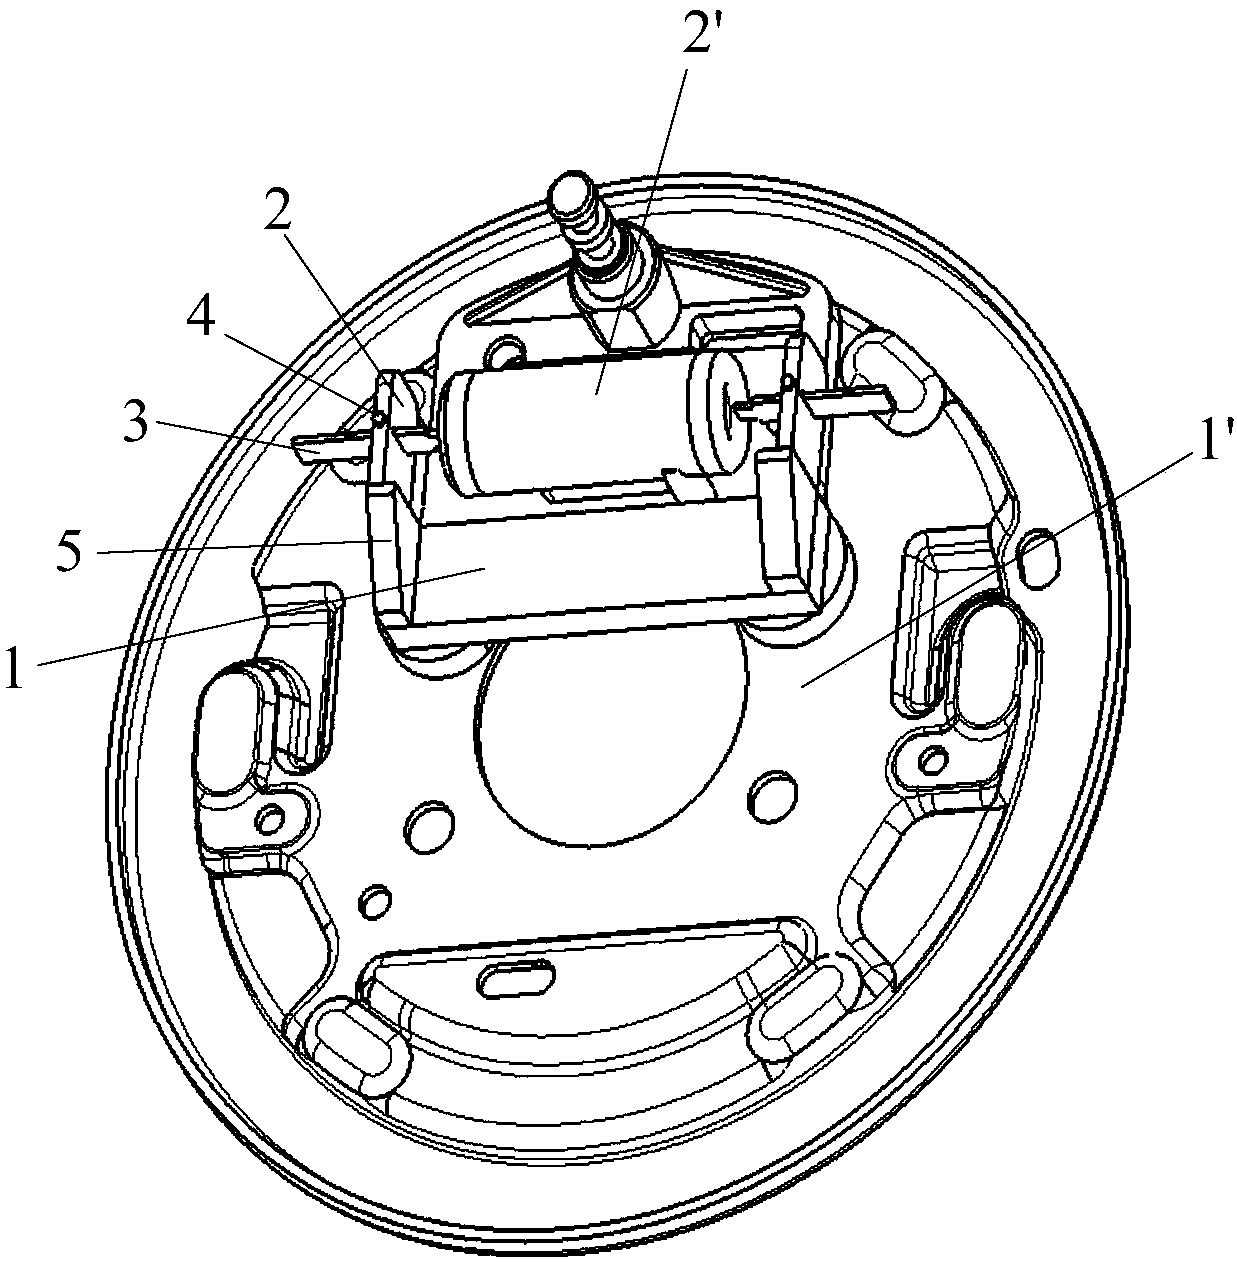 Brake wheel cylinder stroke detecting device